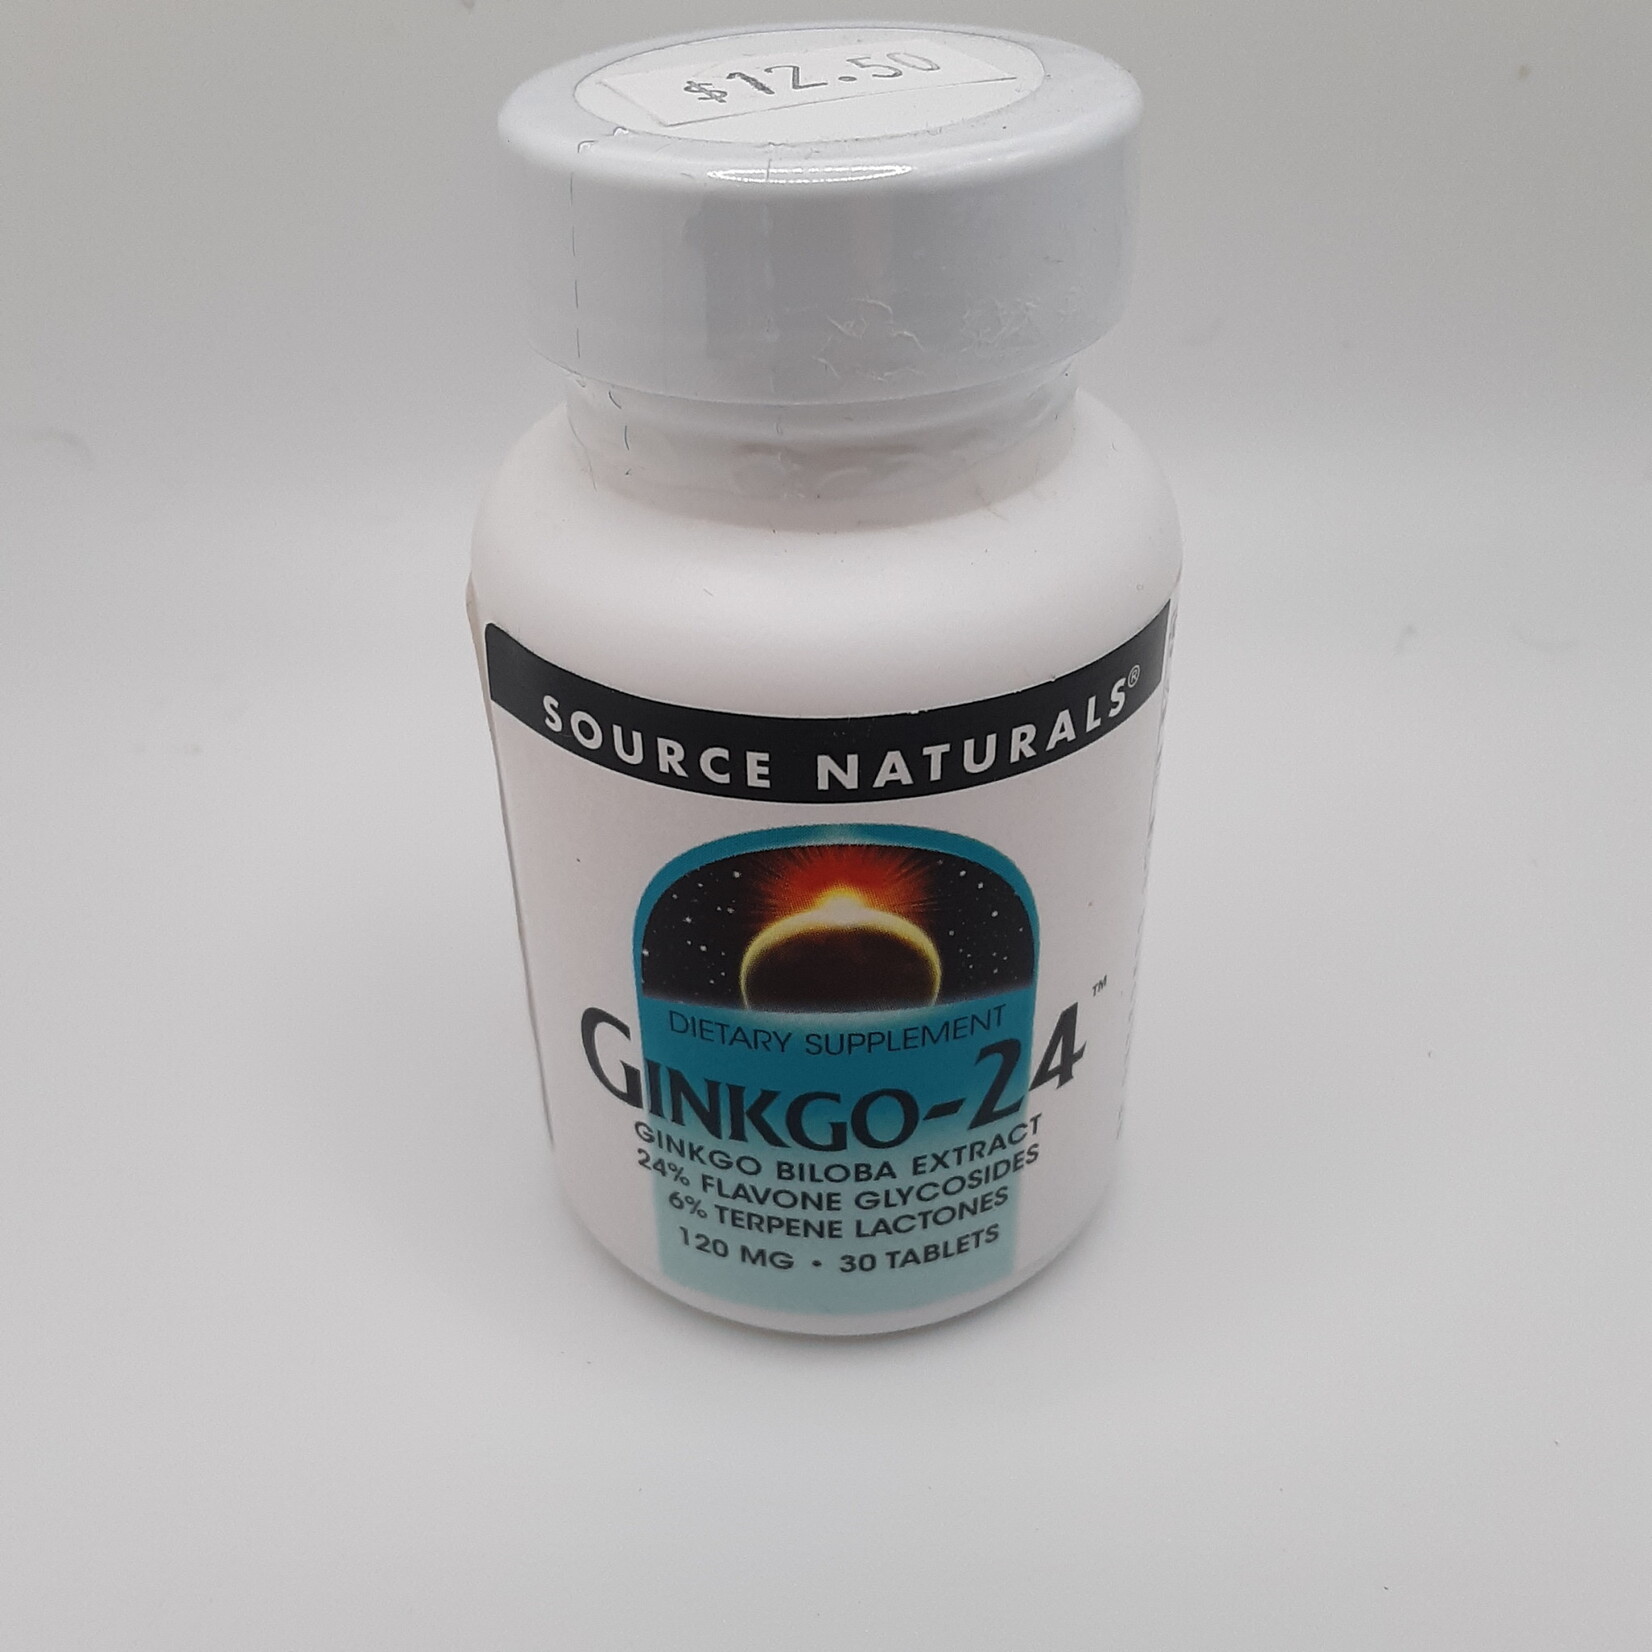 Source Naturals Ginkgo-24, 120 mg, 30 Tablets